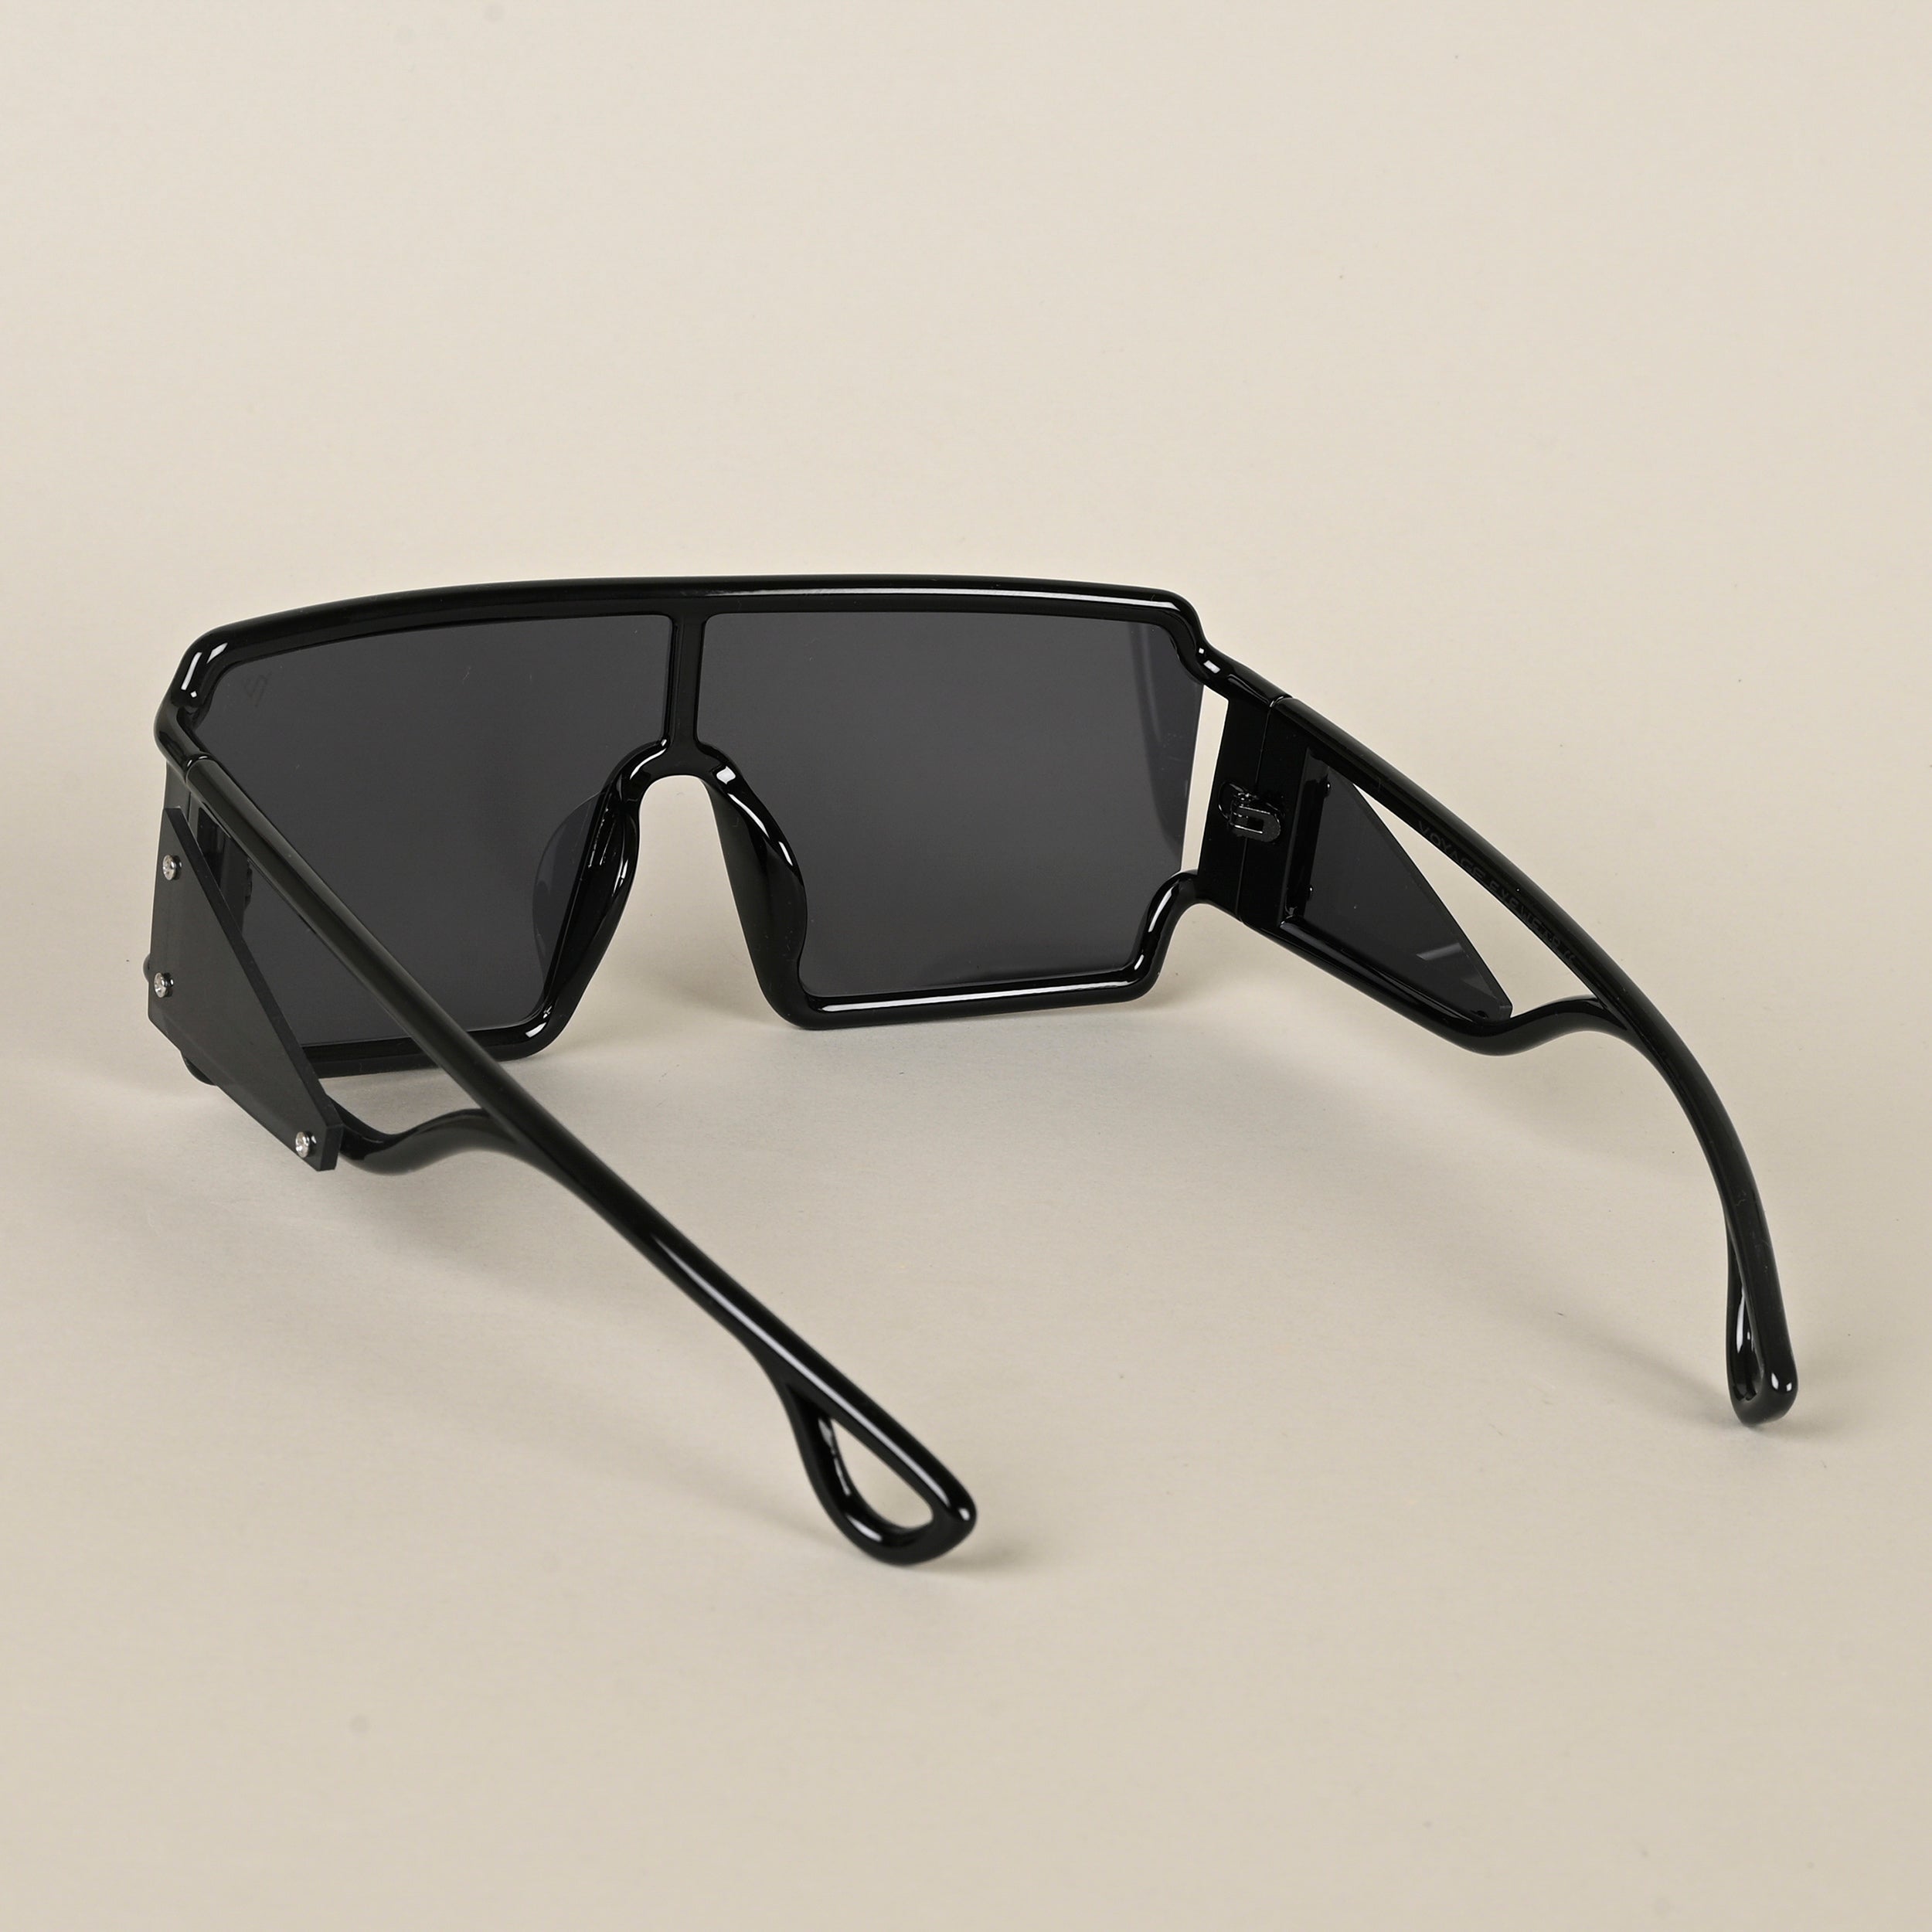 Voyage Black Wayfarer Sunglasses for Men & Women - MG4564